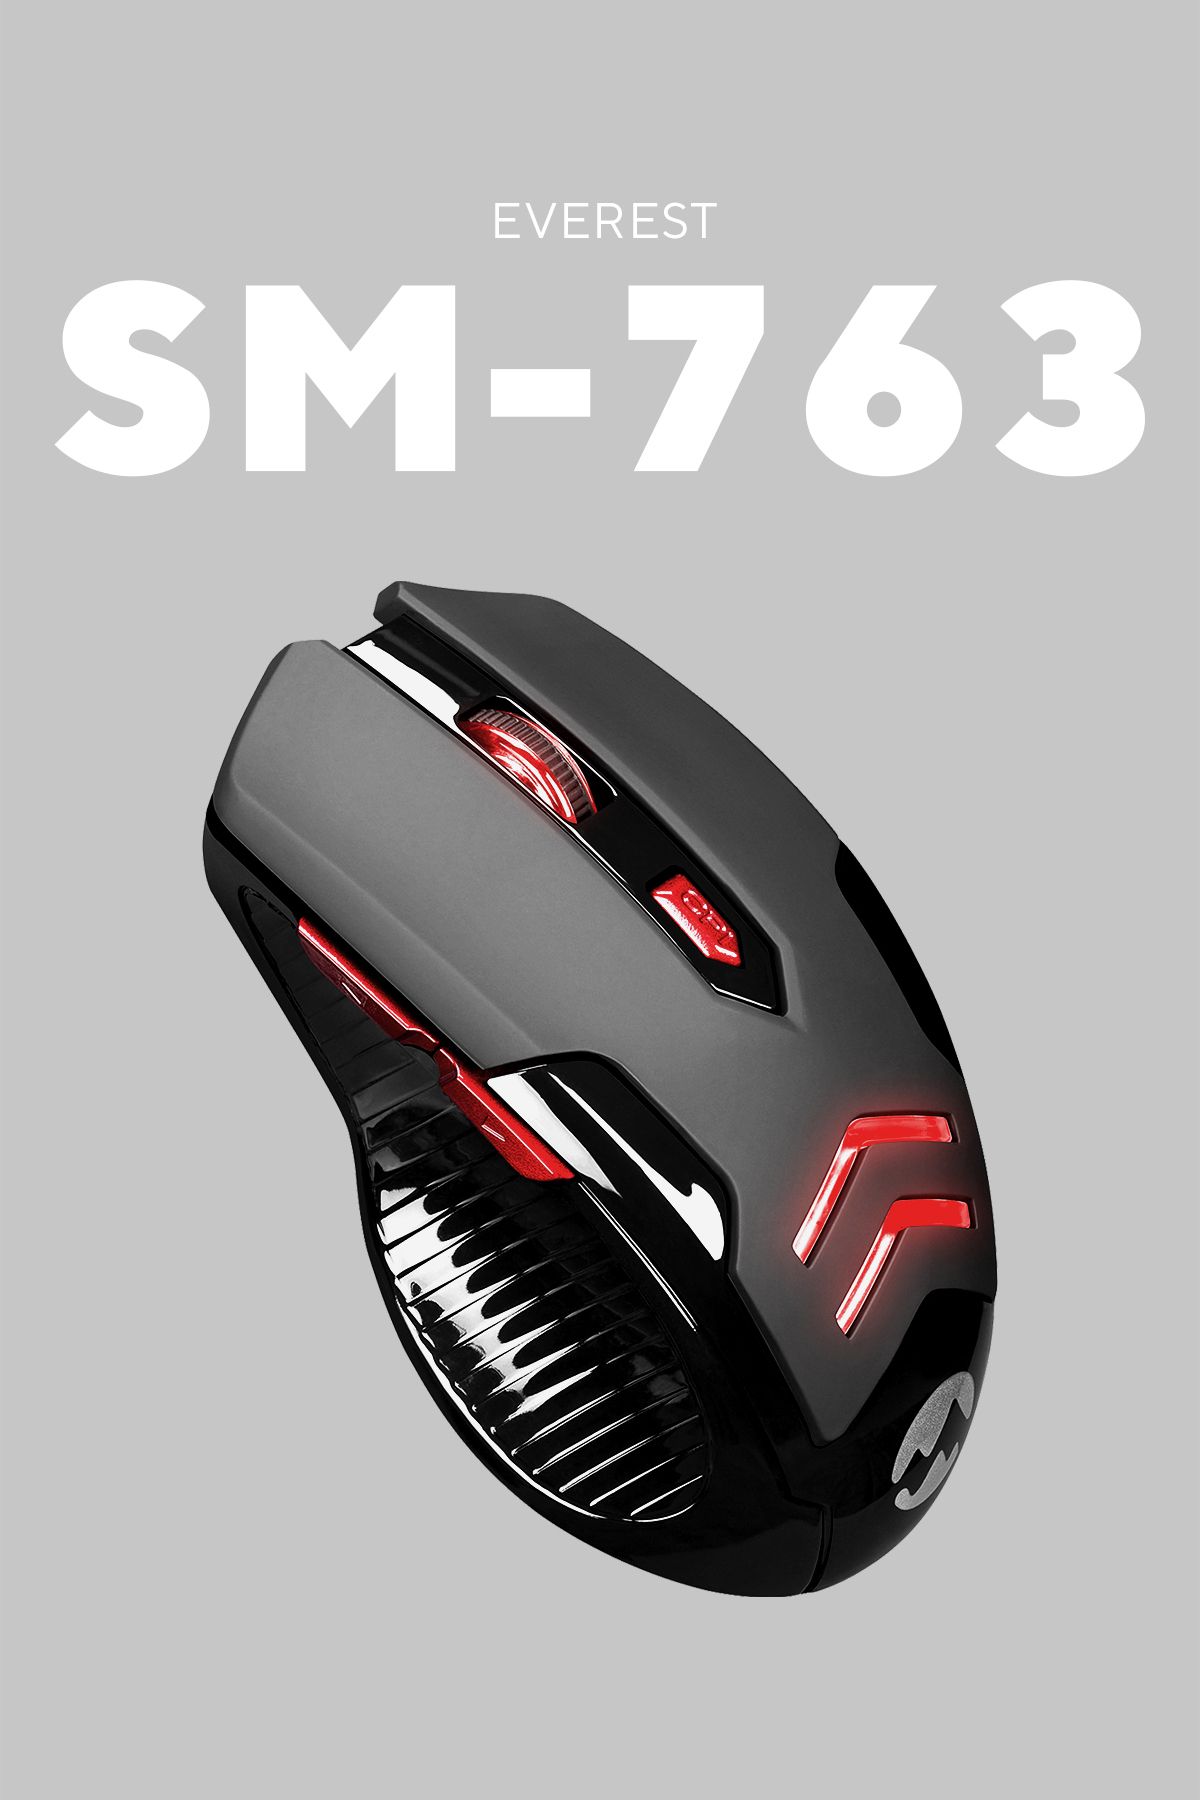 Everest Sm-763 2400 Dpi 2.4 Ghz Aydınlatmalı Gaming Oyuncu Kablosuz Mouse